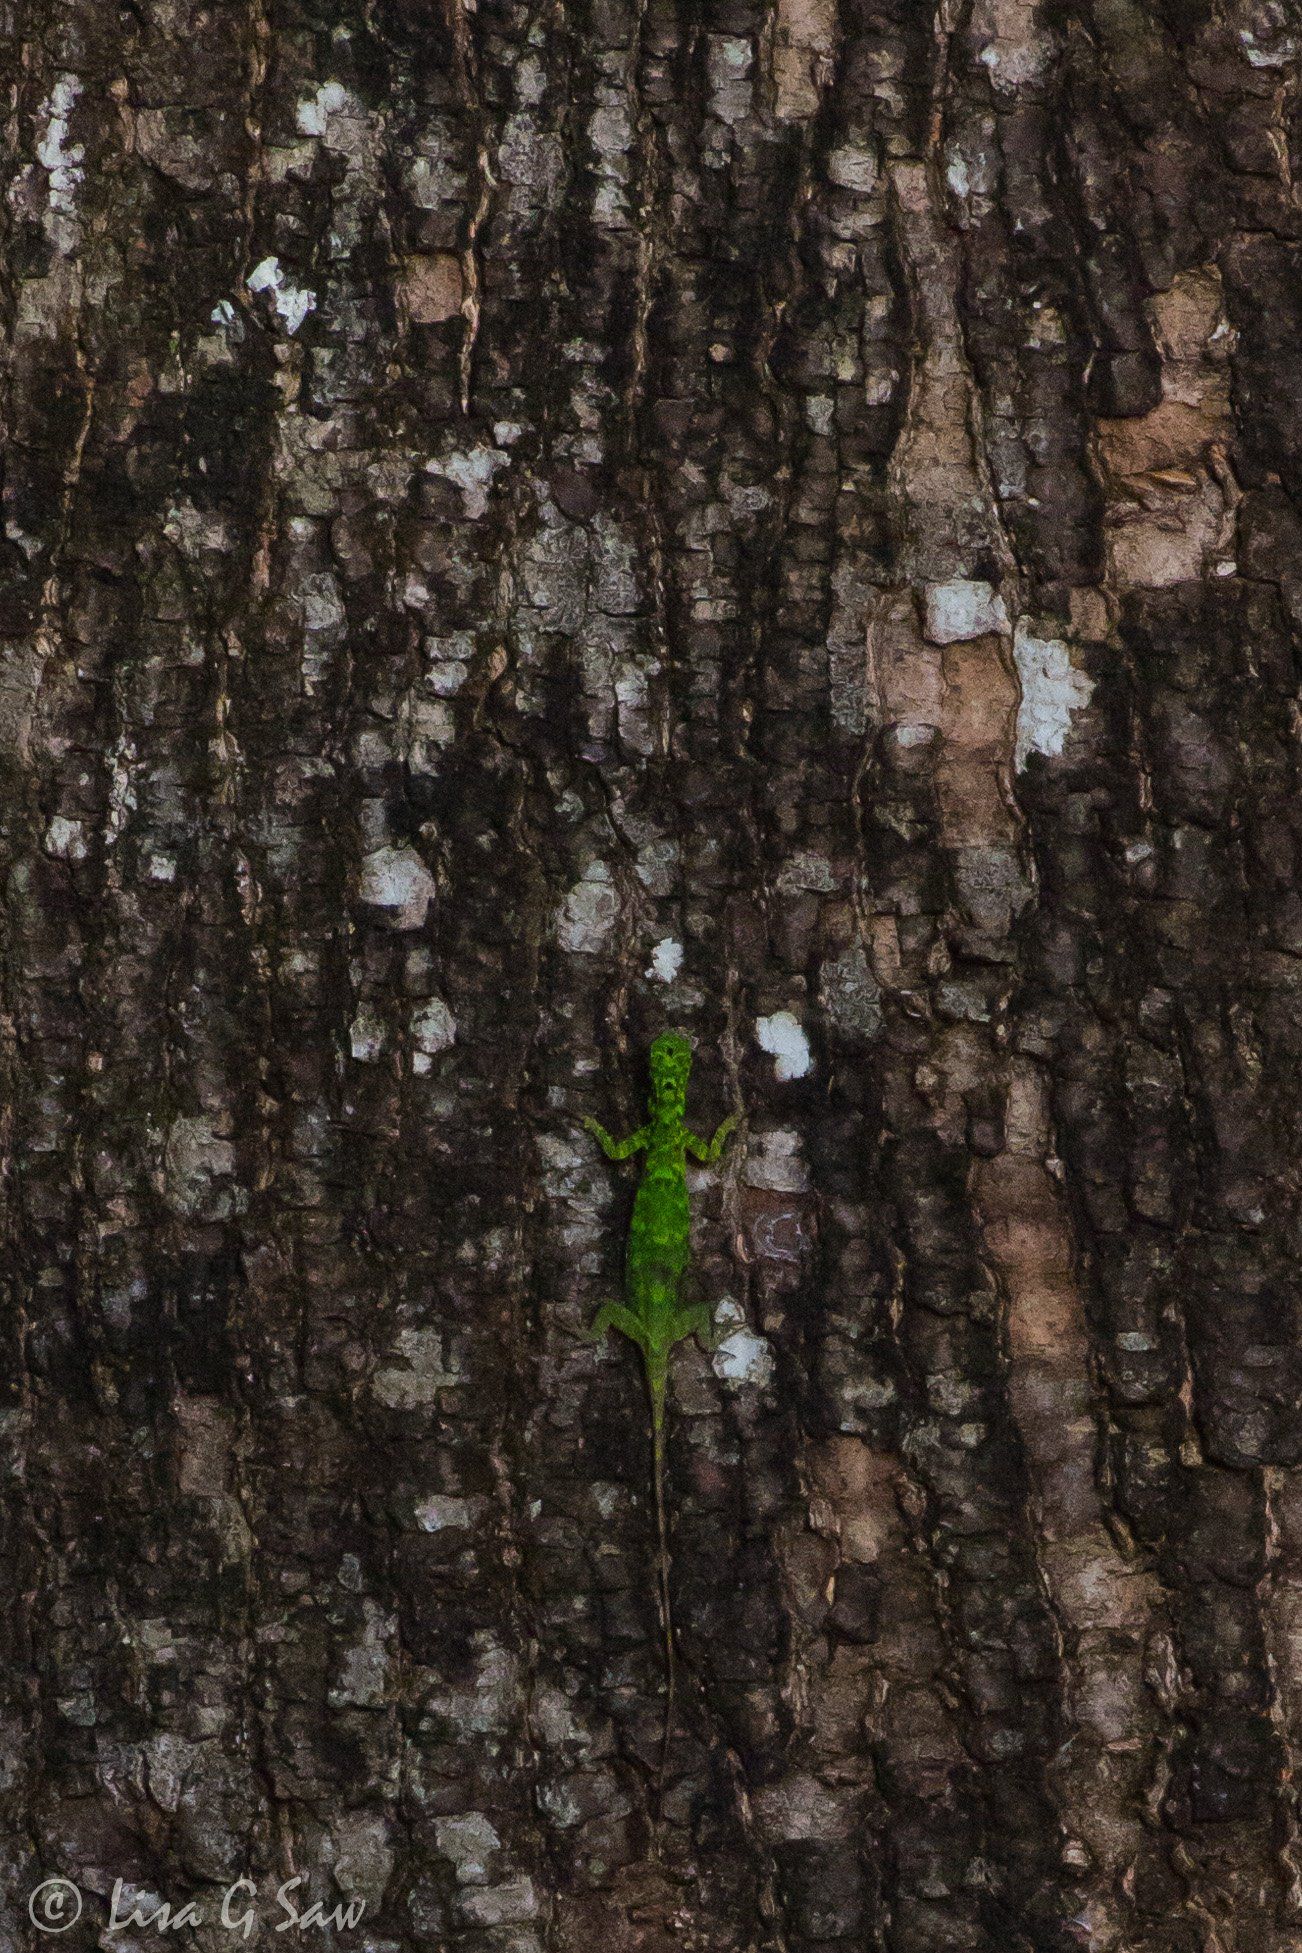 Green Horned Flying lizard on a tree trunk, Sepilok